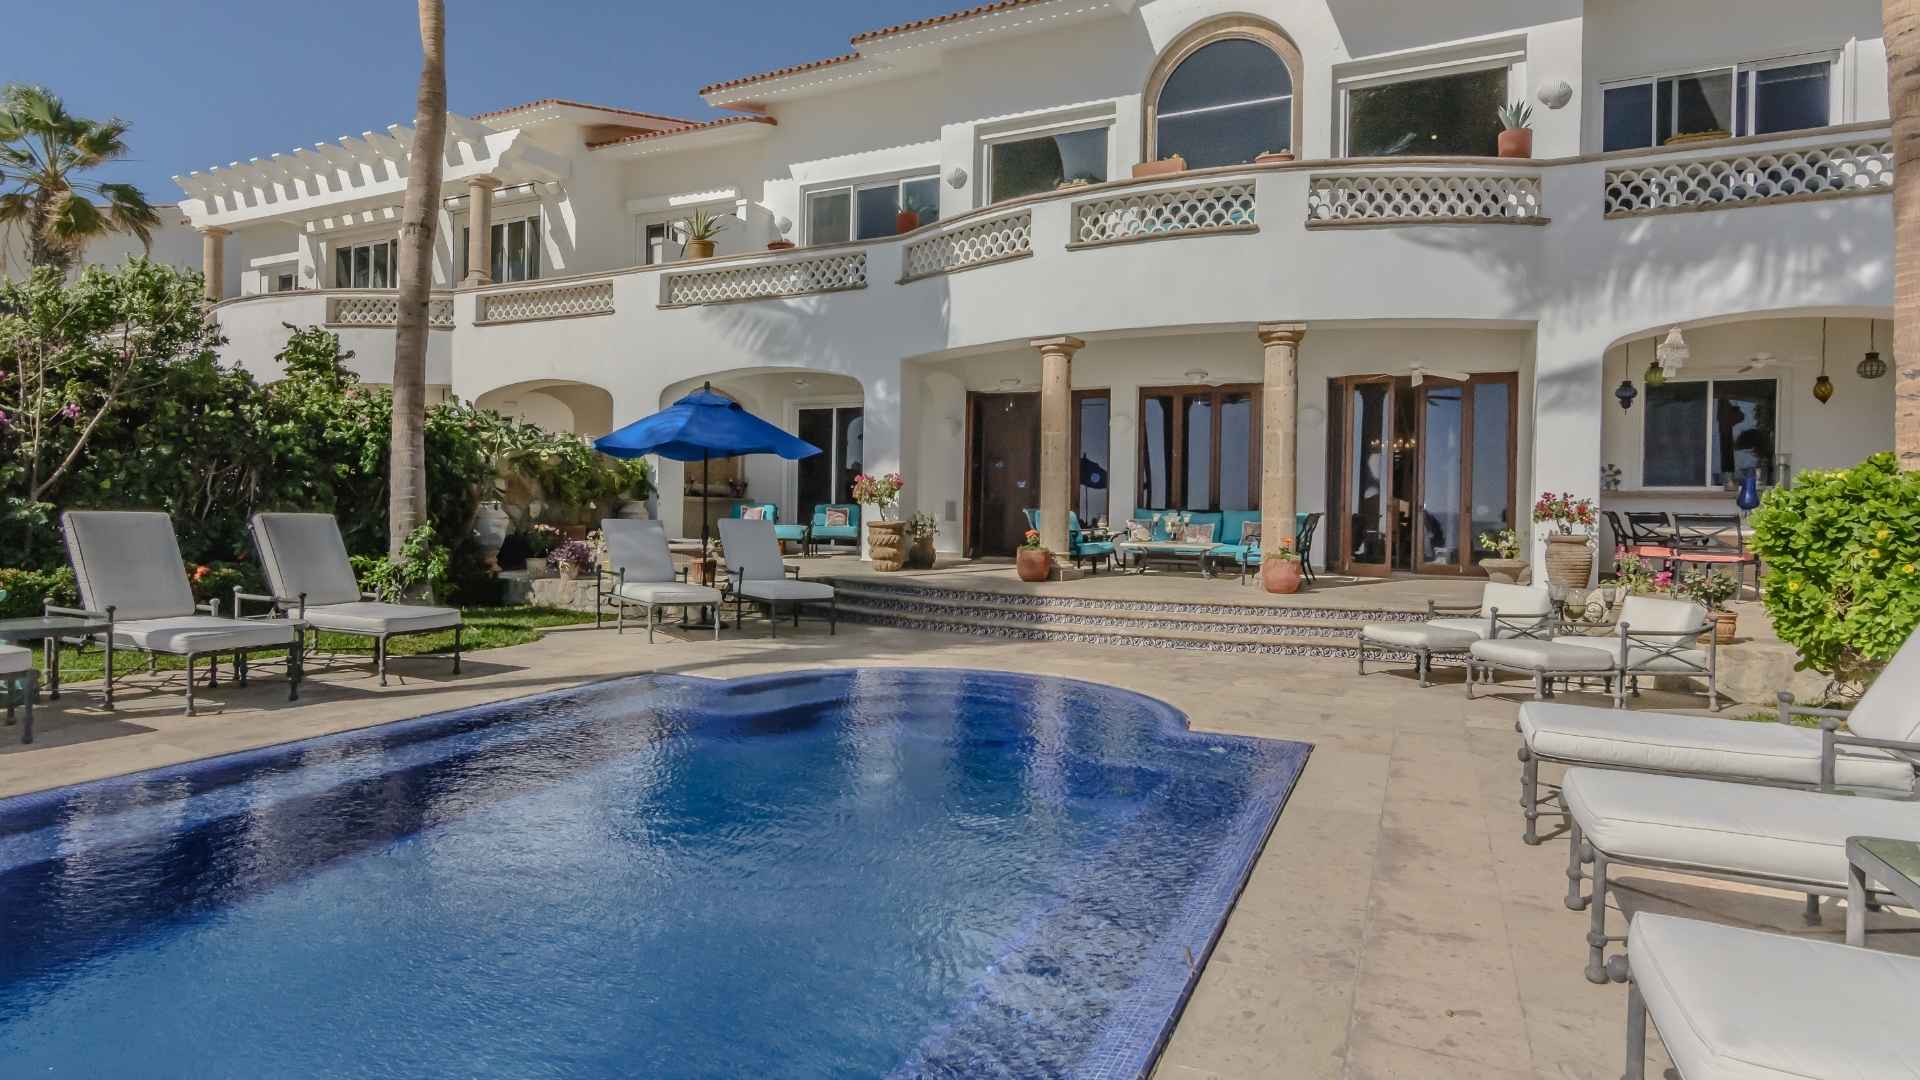 Villa 461 - San Jose del Cabo